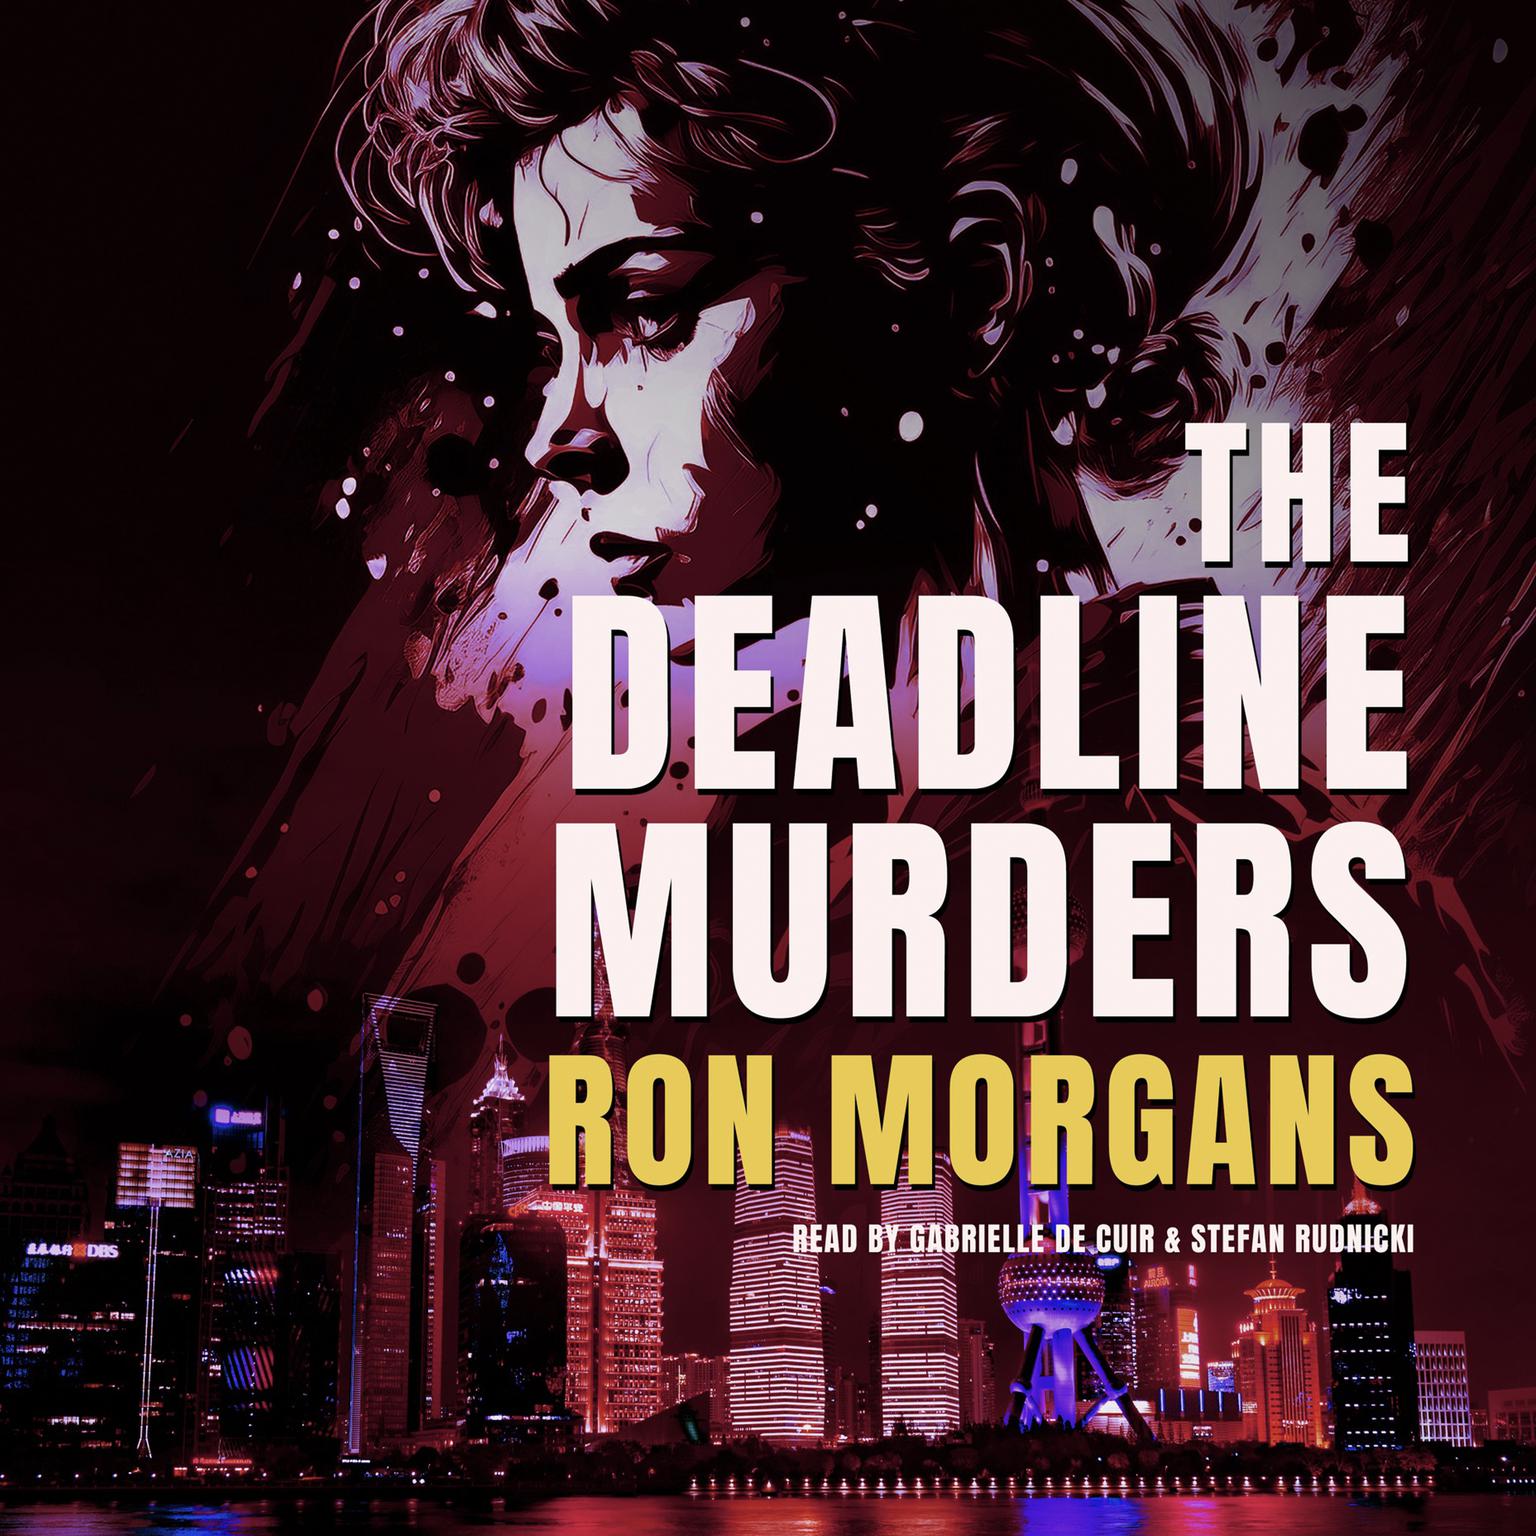 The Deadline Murders Audiobook, by Ron Morgans